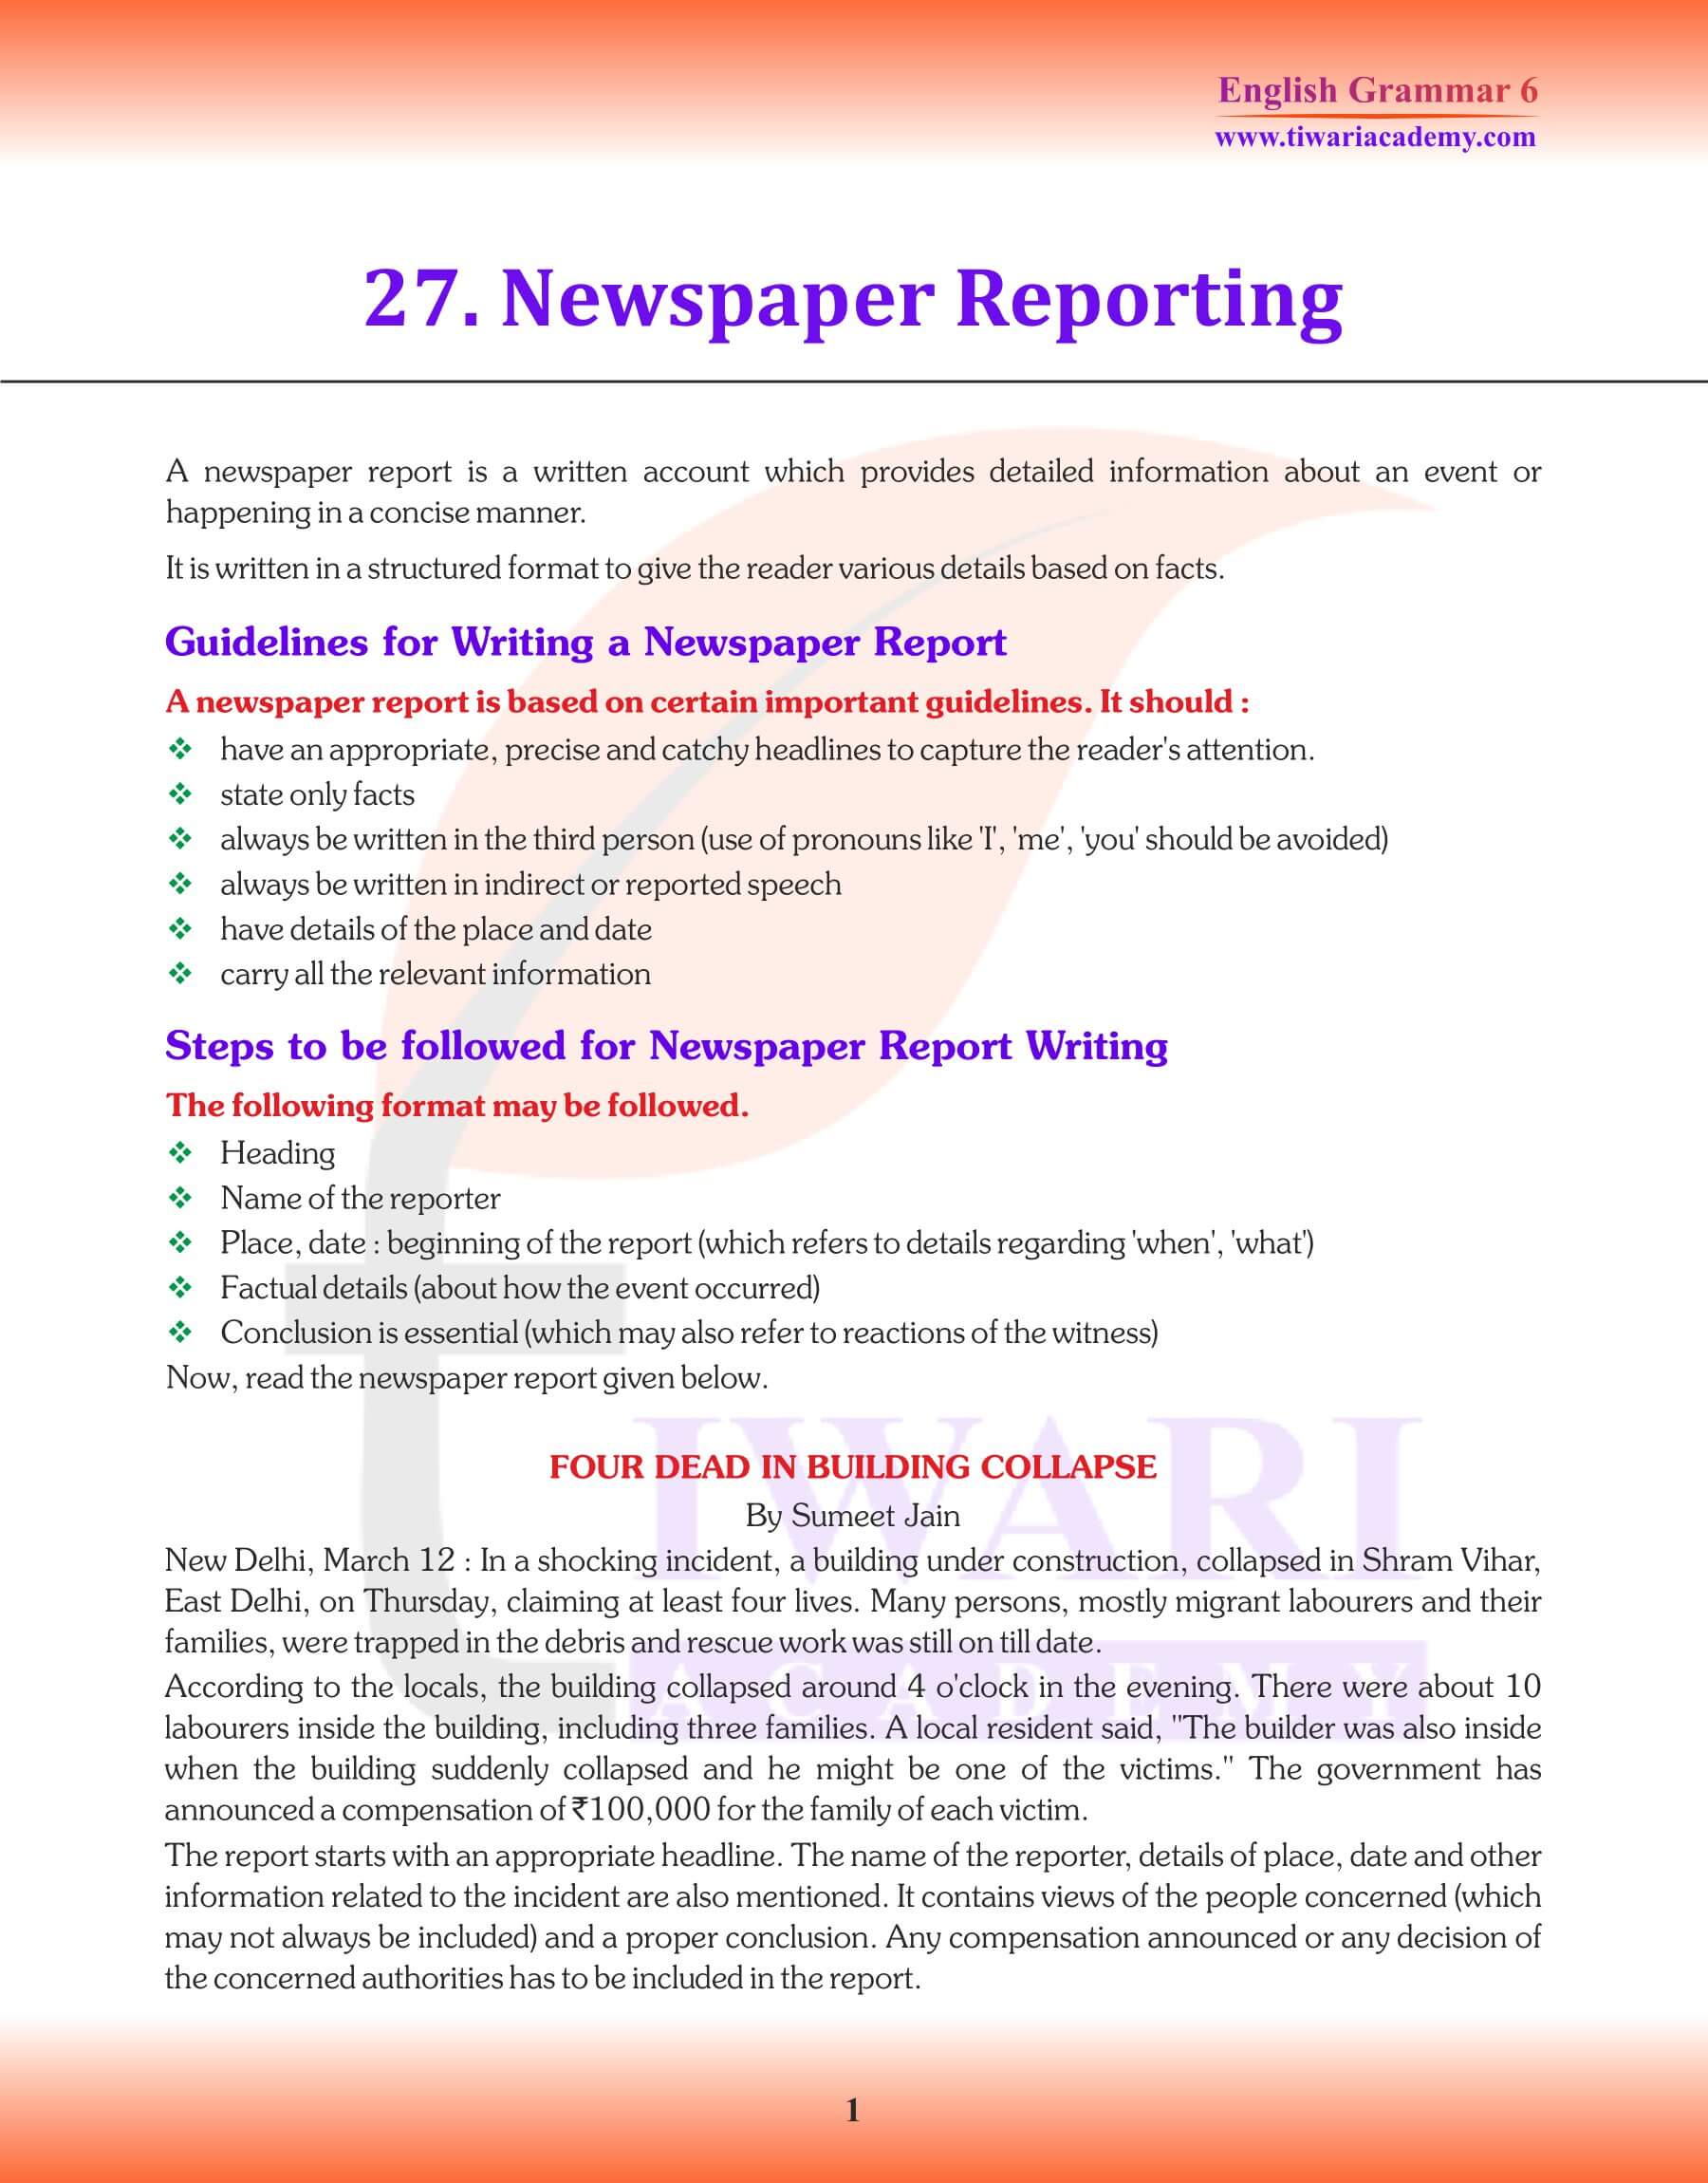 NEWS paper reporting